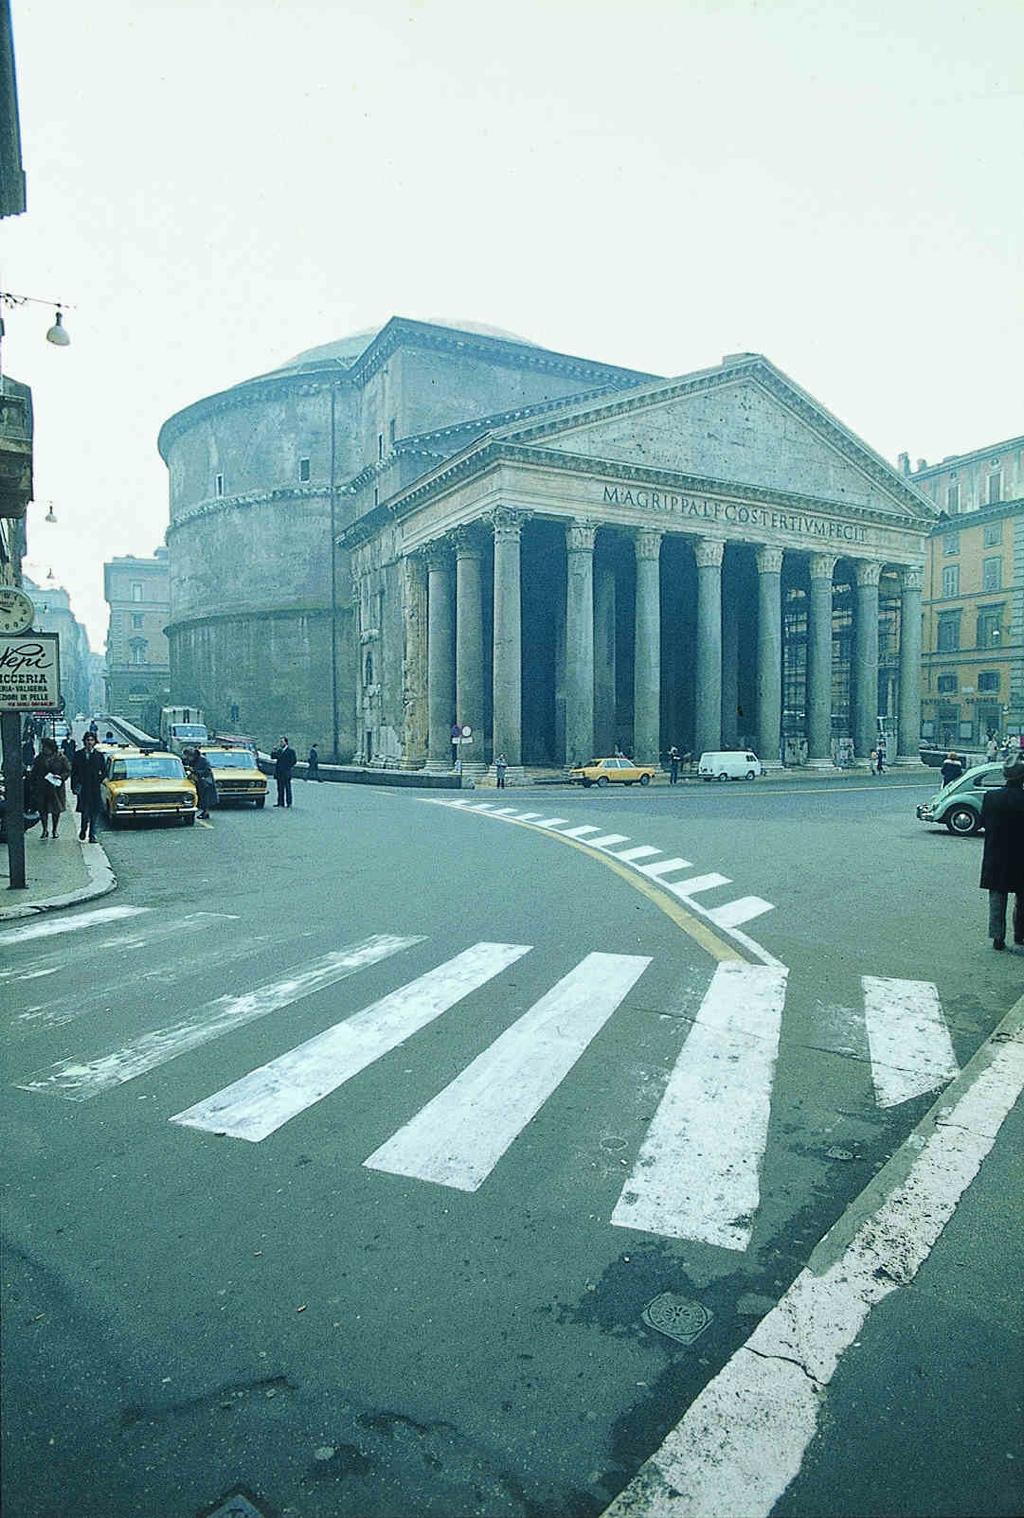 Pantheon, (25 CE),